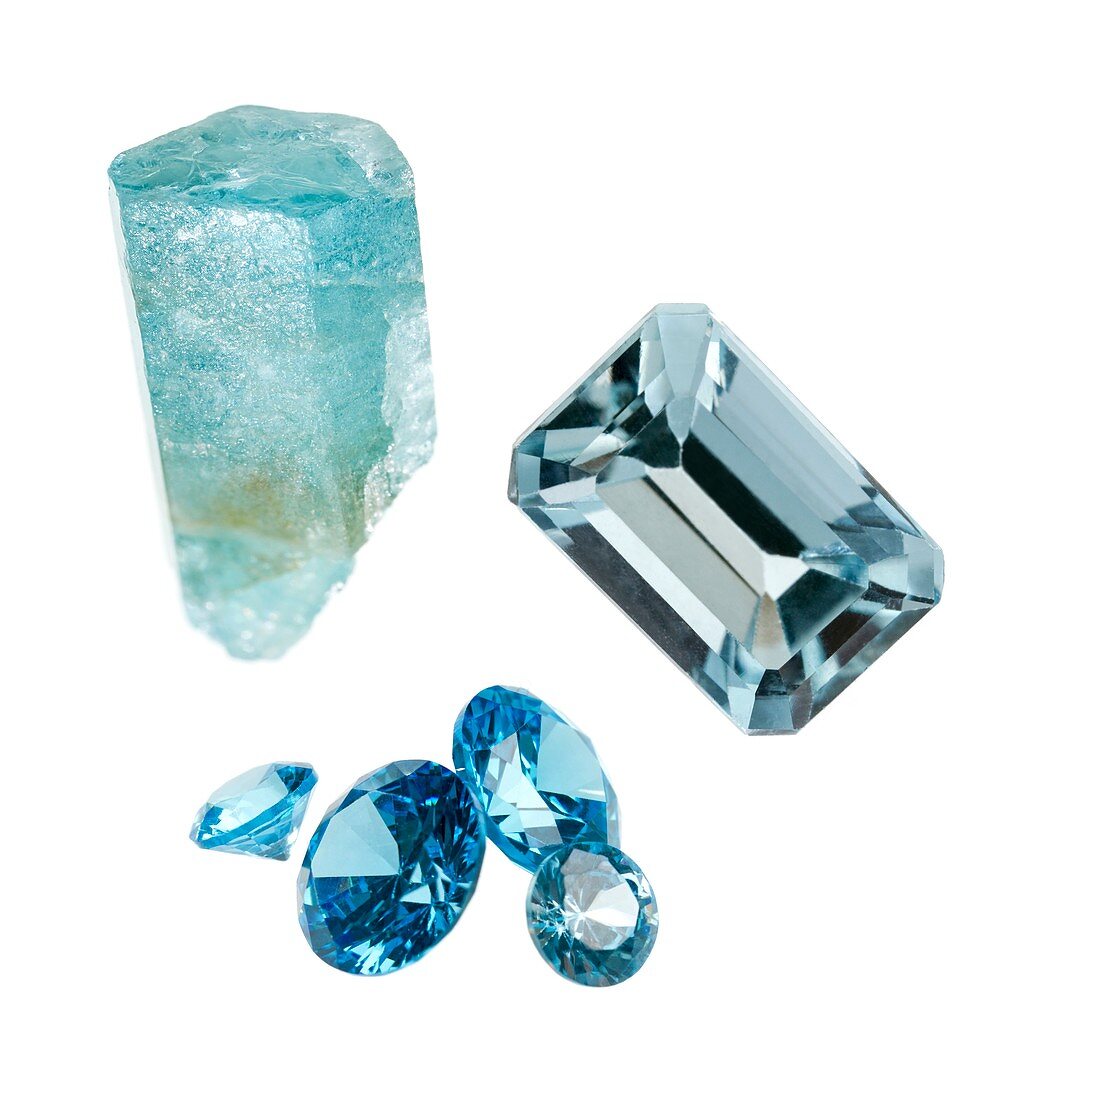 Aquamarine gemstones and crystal